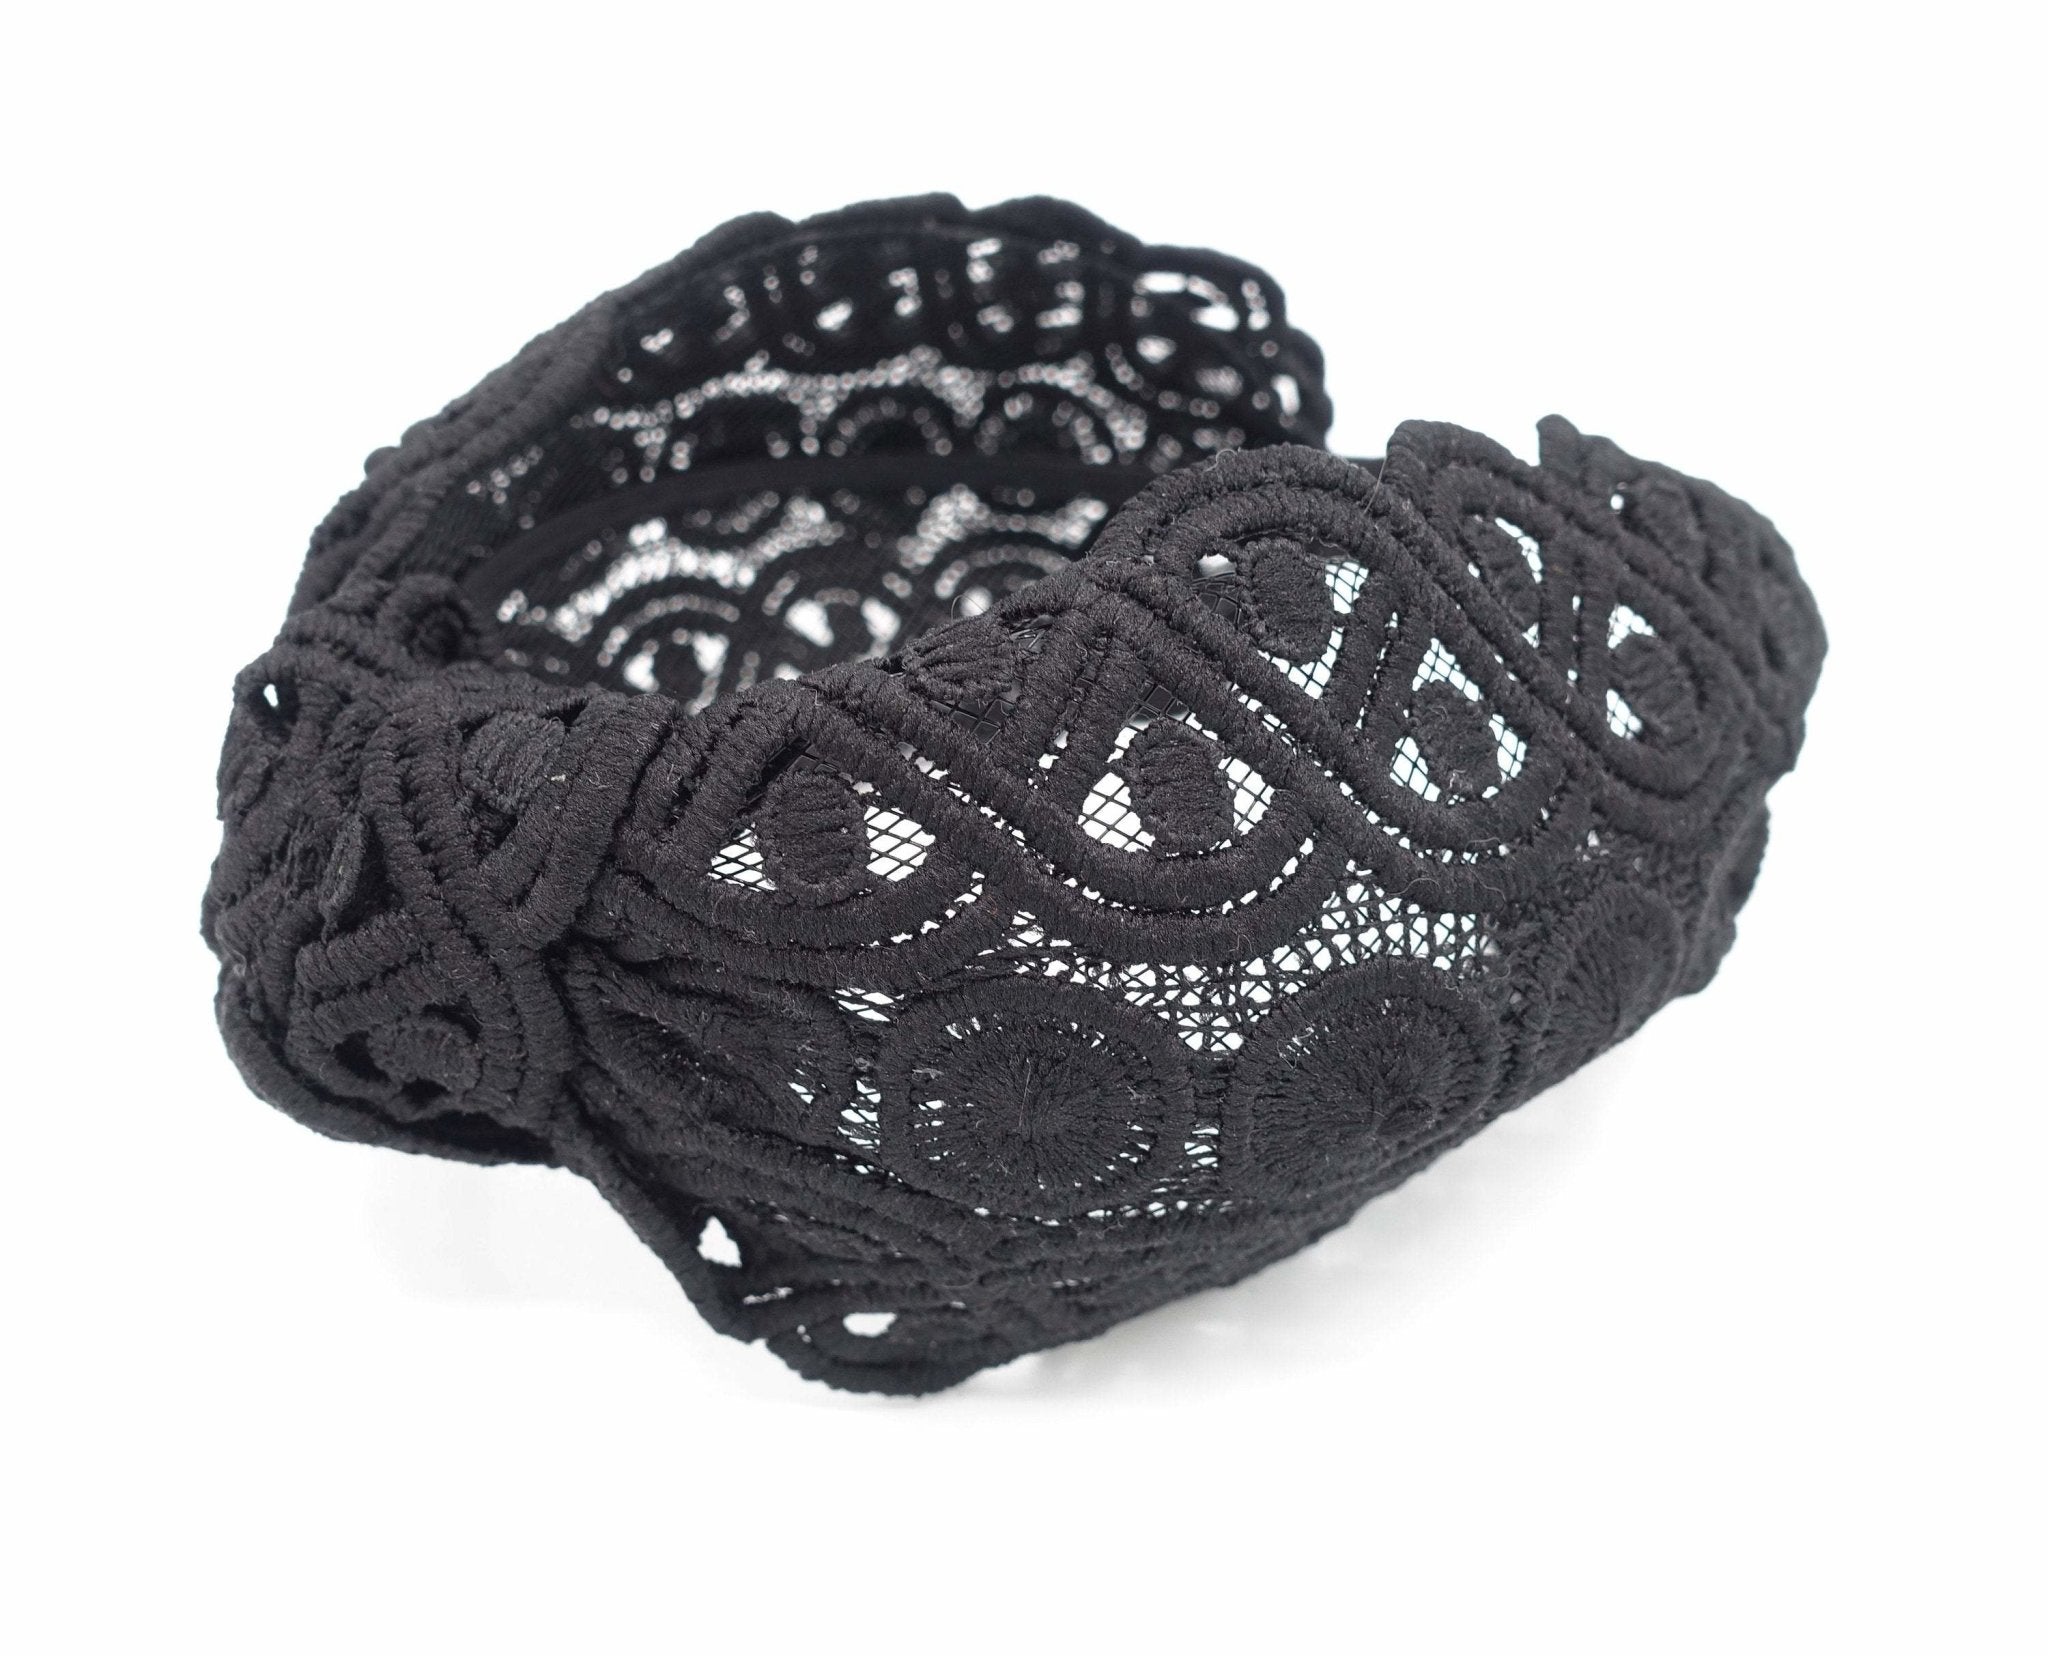 VeryShine circle twist pattern knot headband mesh hairband for women